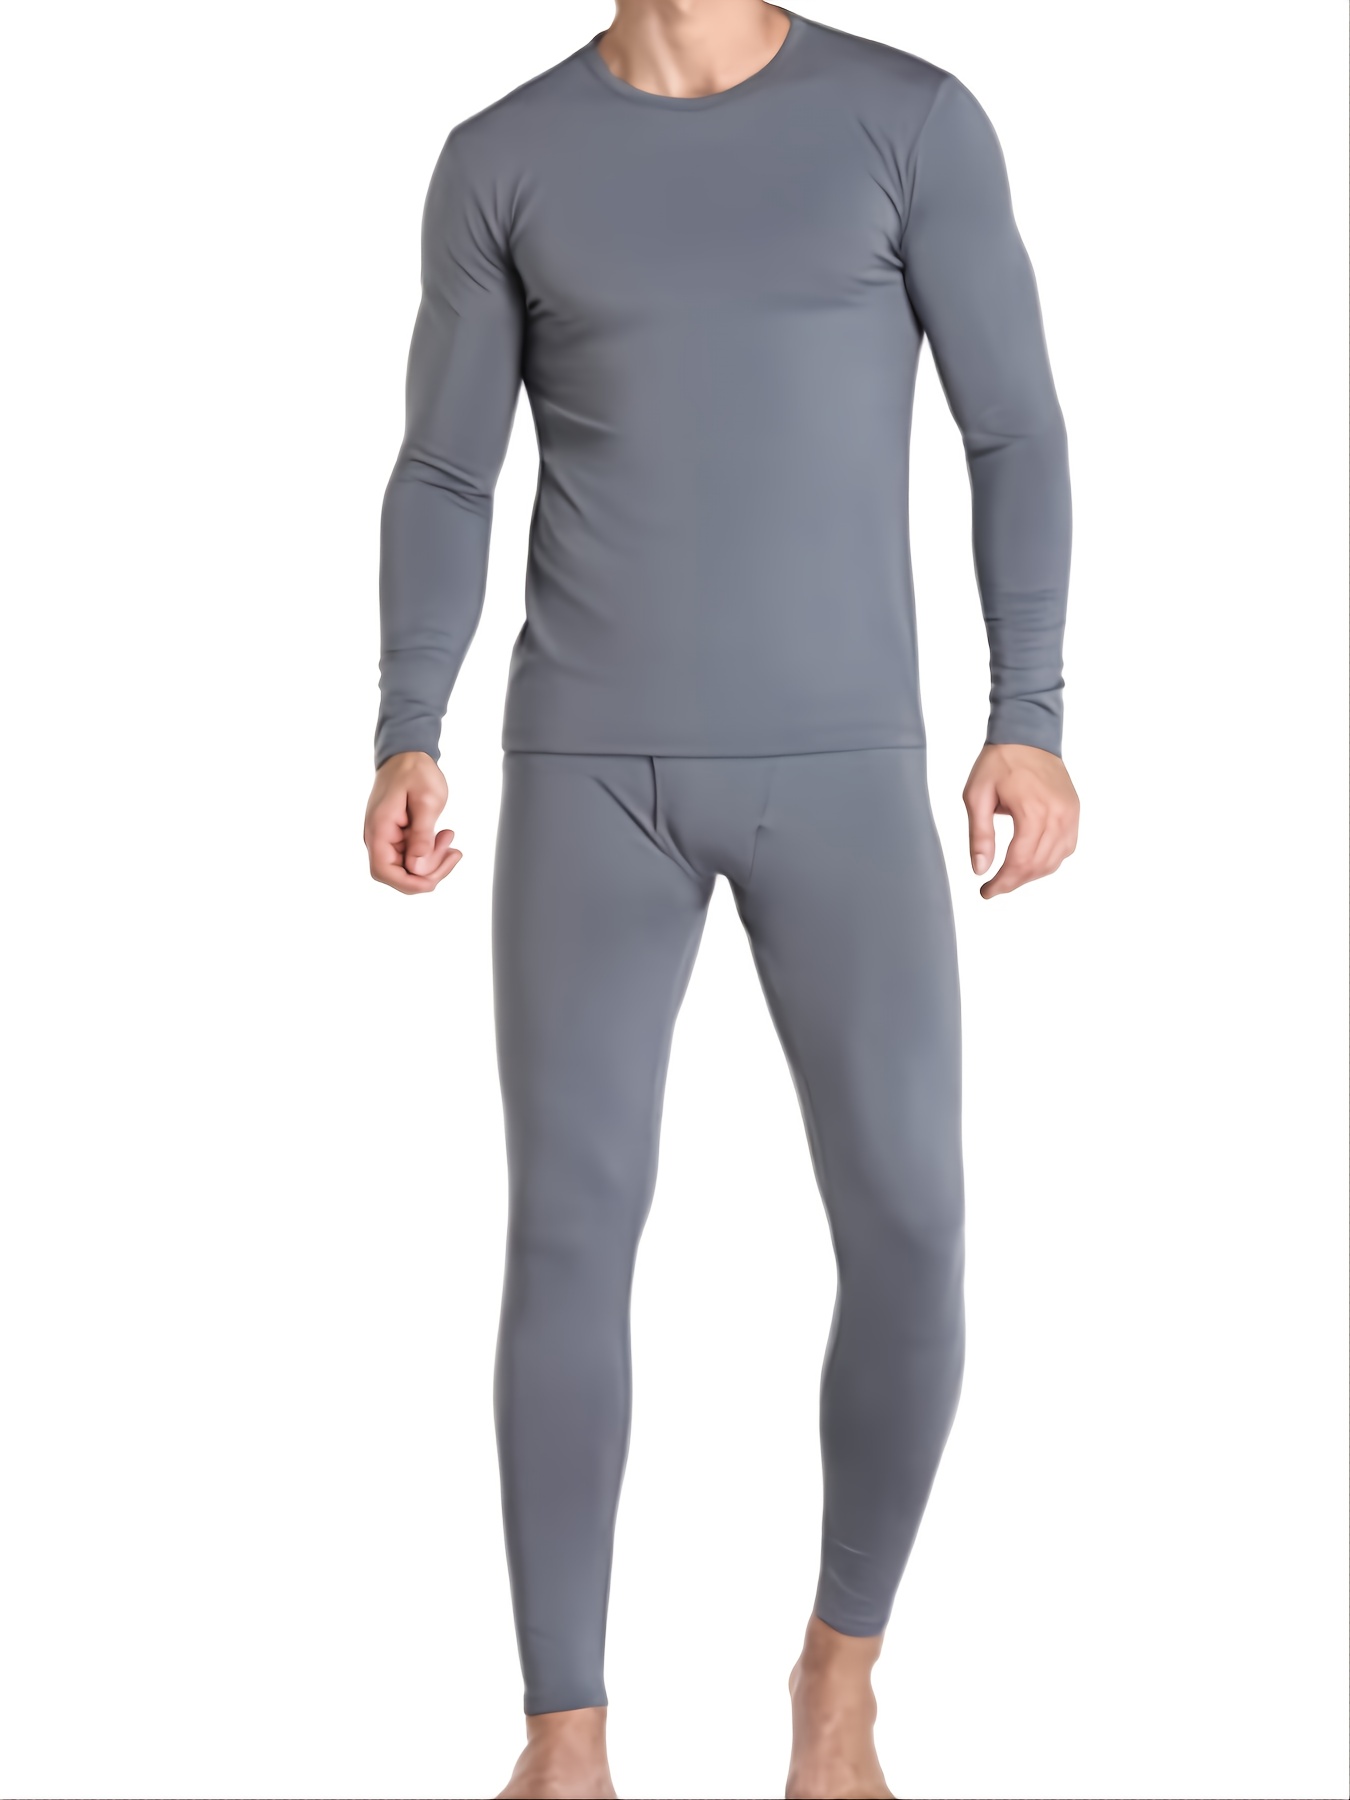 Body Glove 2-Pc Mens Thermal Underwear Set, Warm Fleece Lined